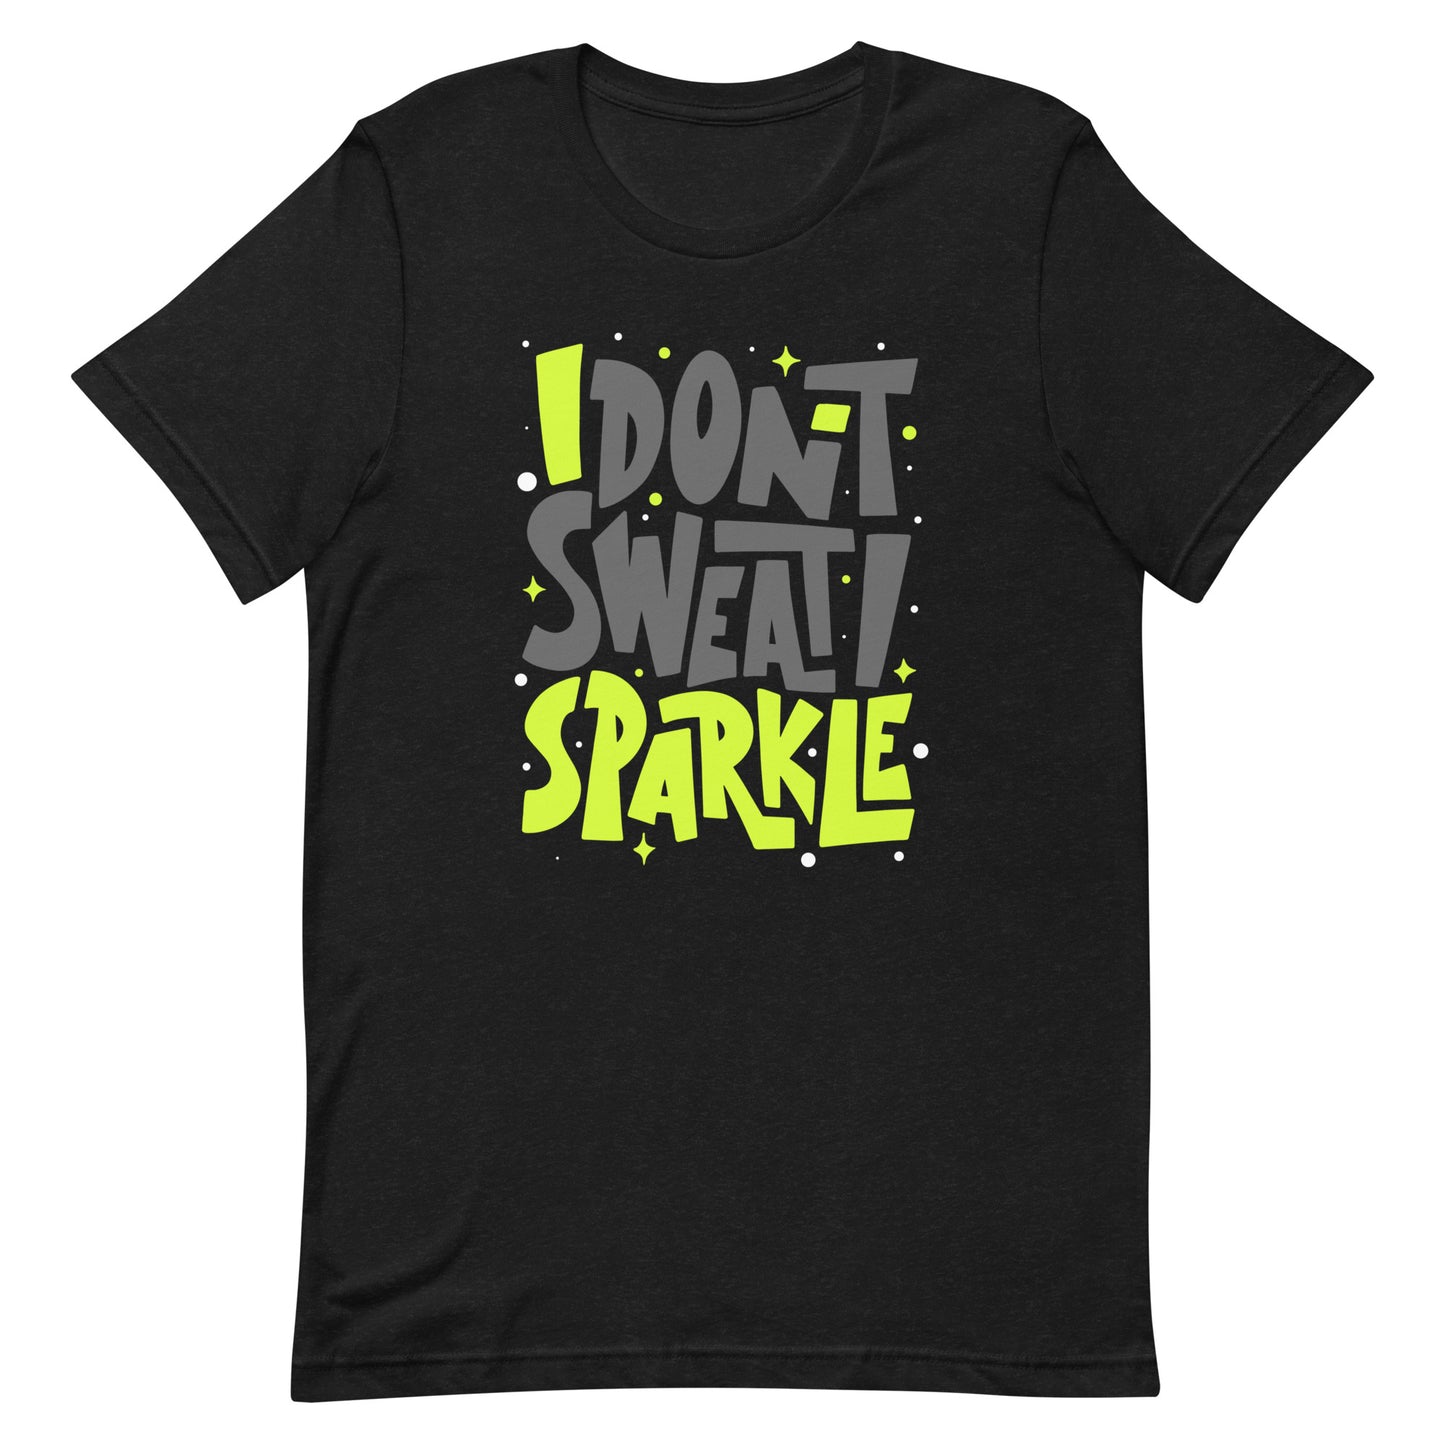 I don't sweat i sparkle t-shirt The Workout Inspiration